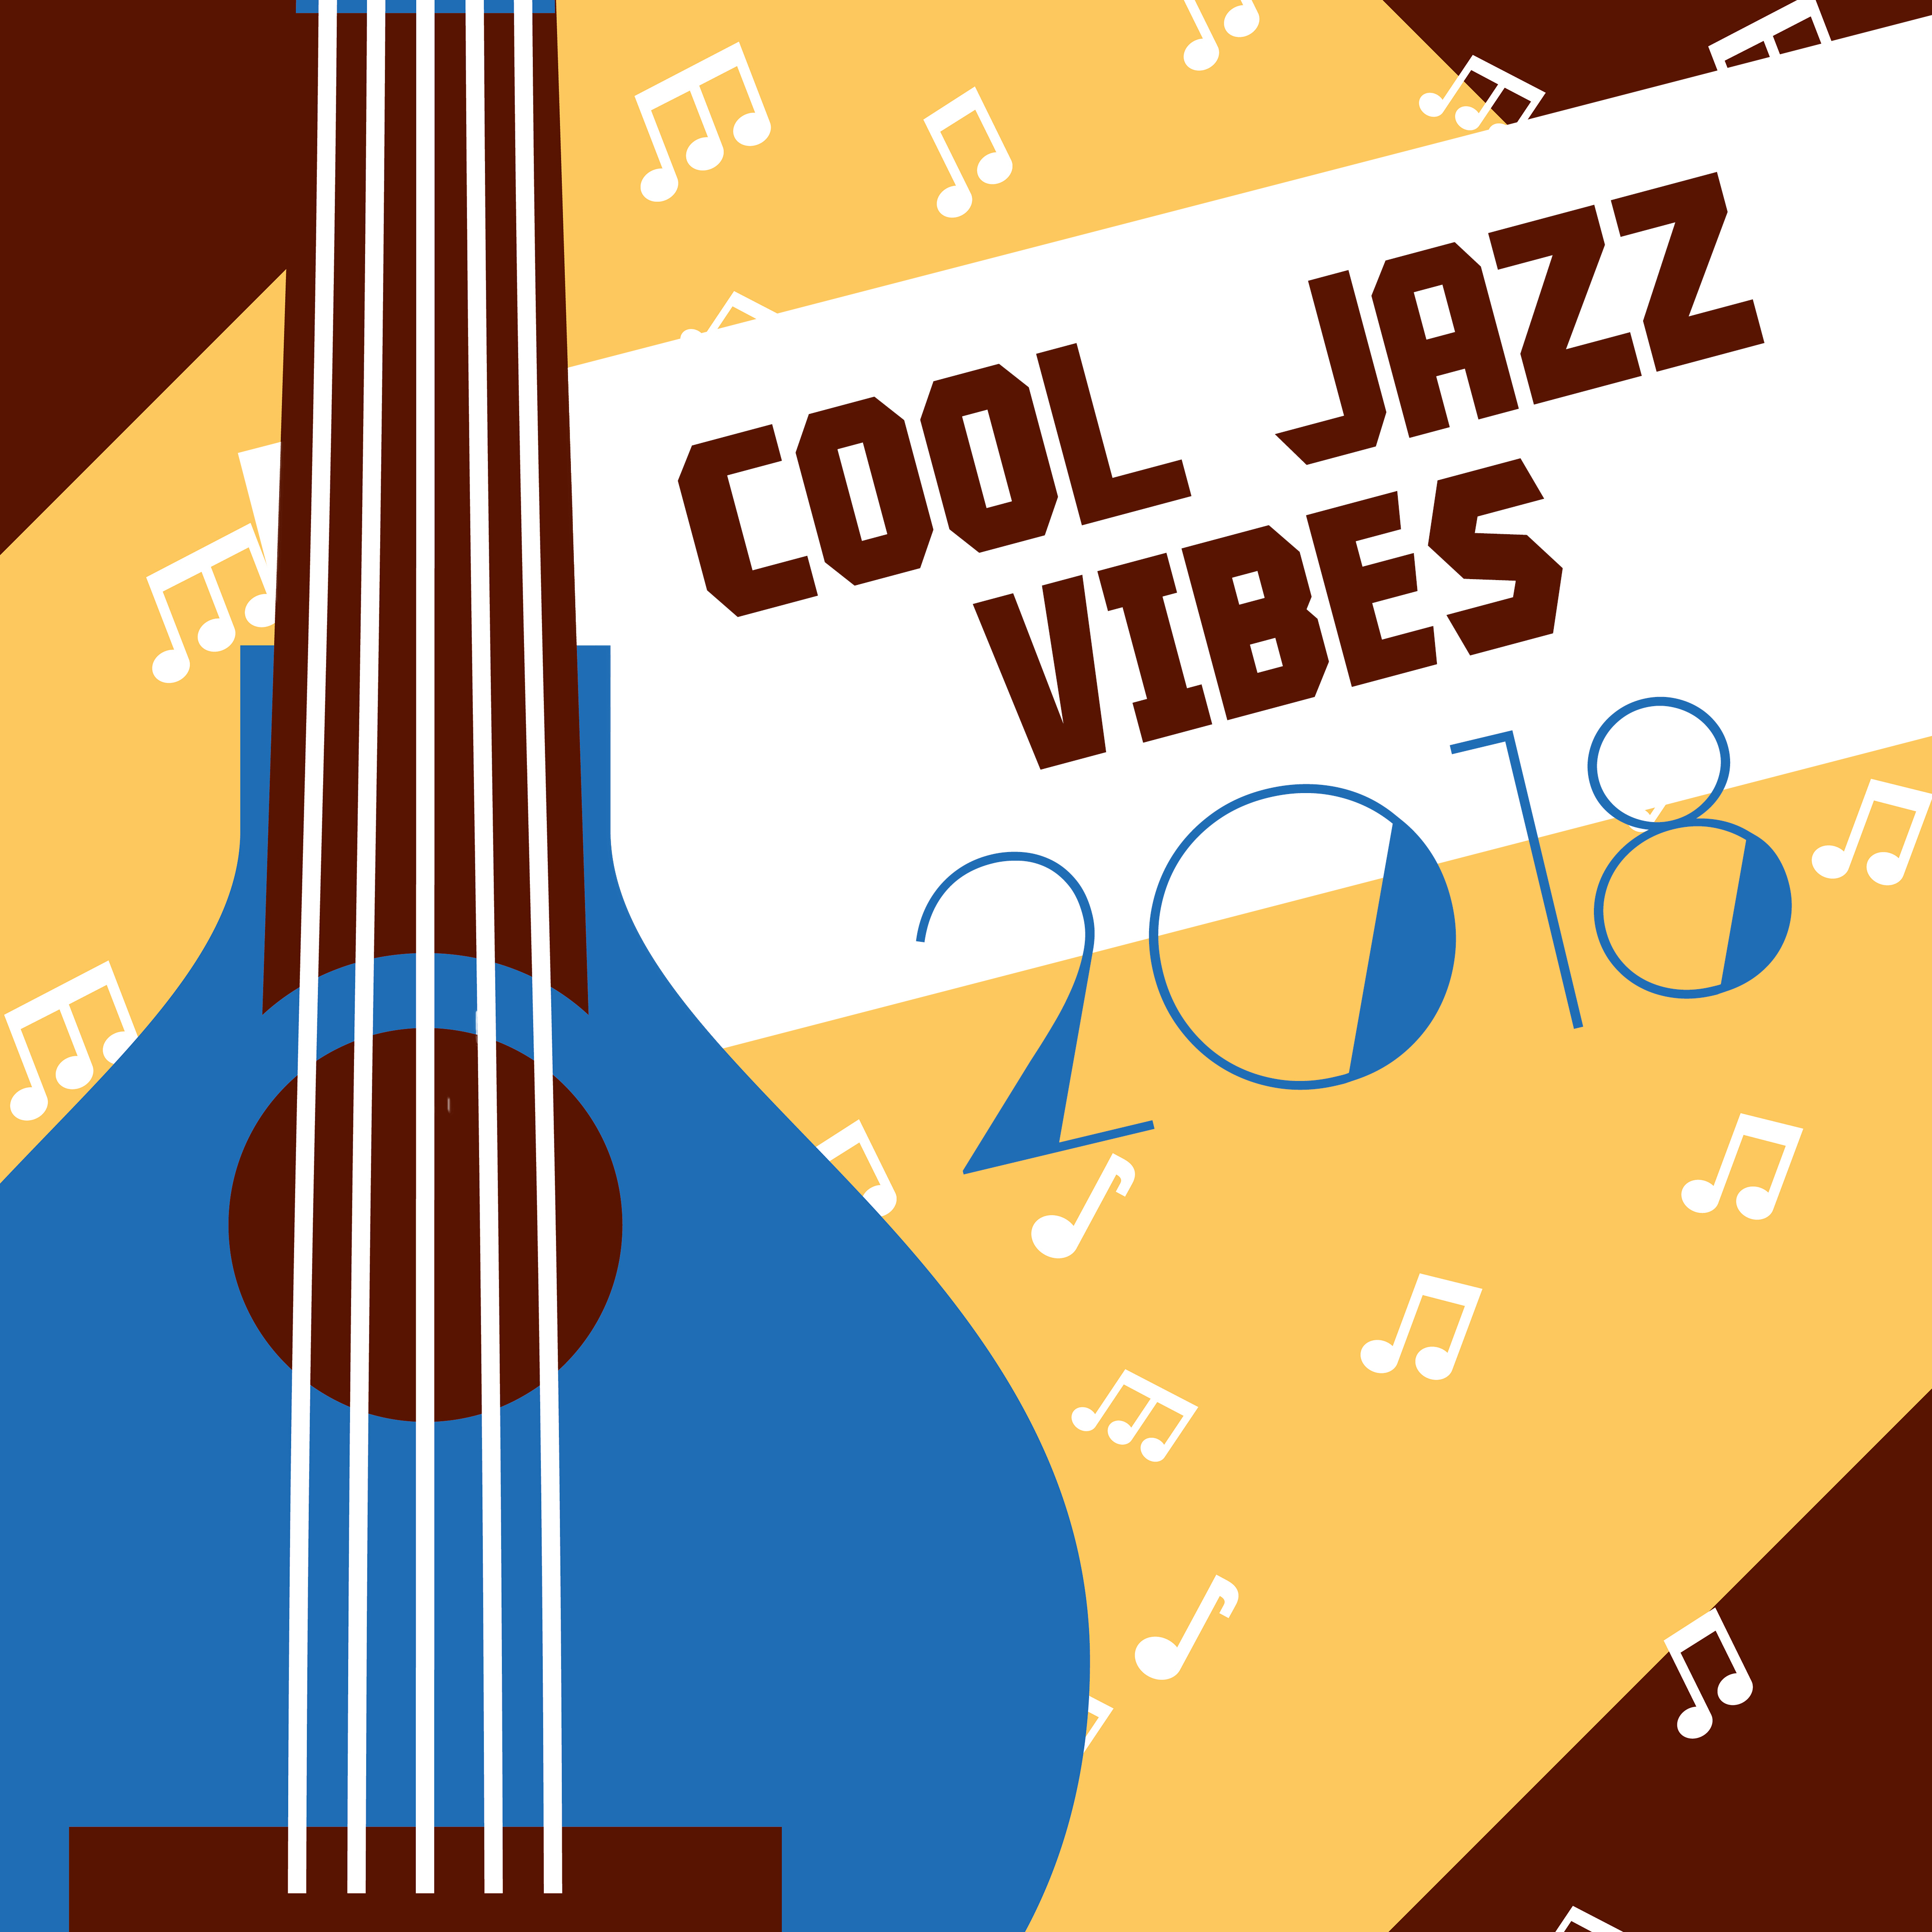 Cool Jazz Vibes 2018